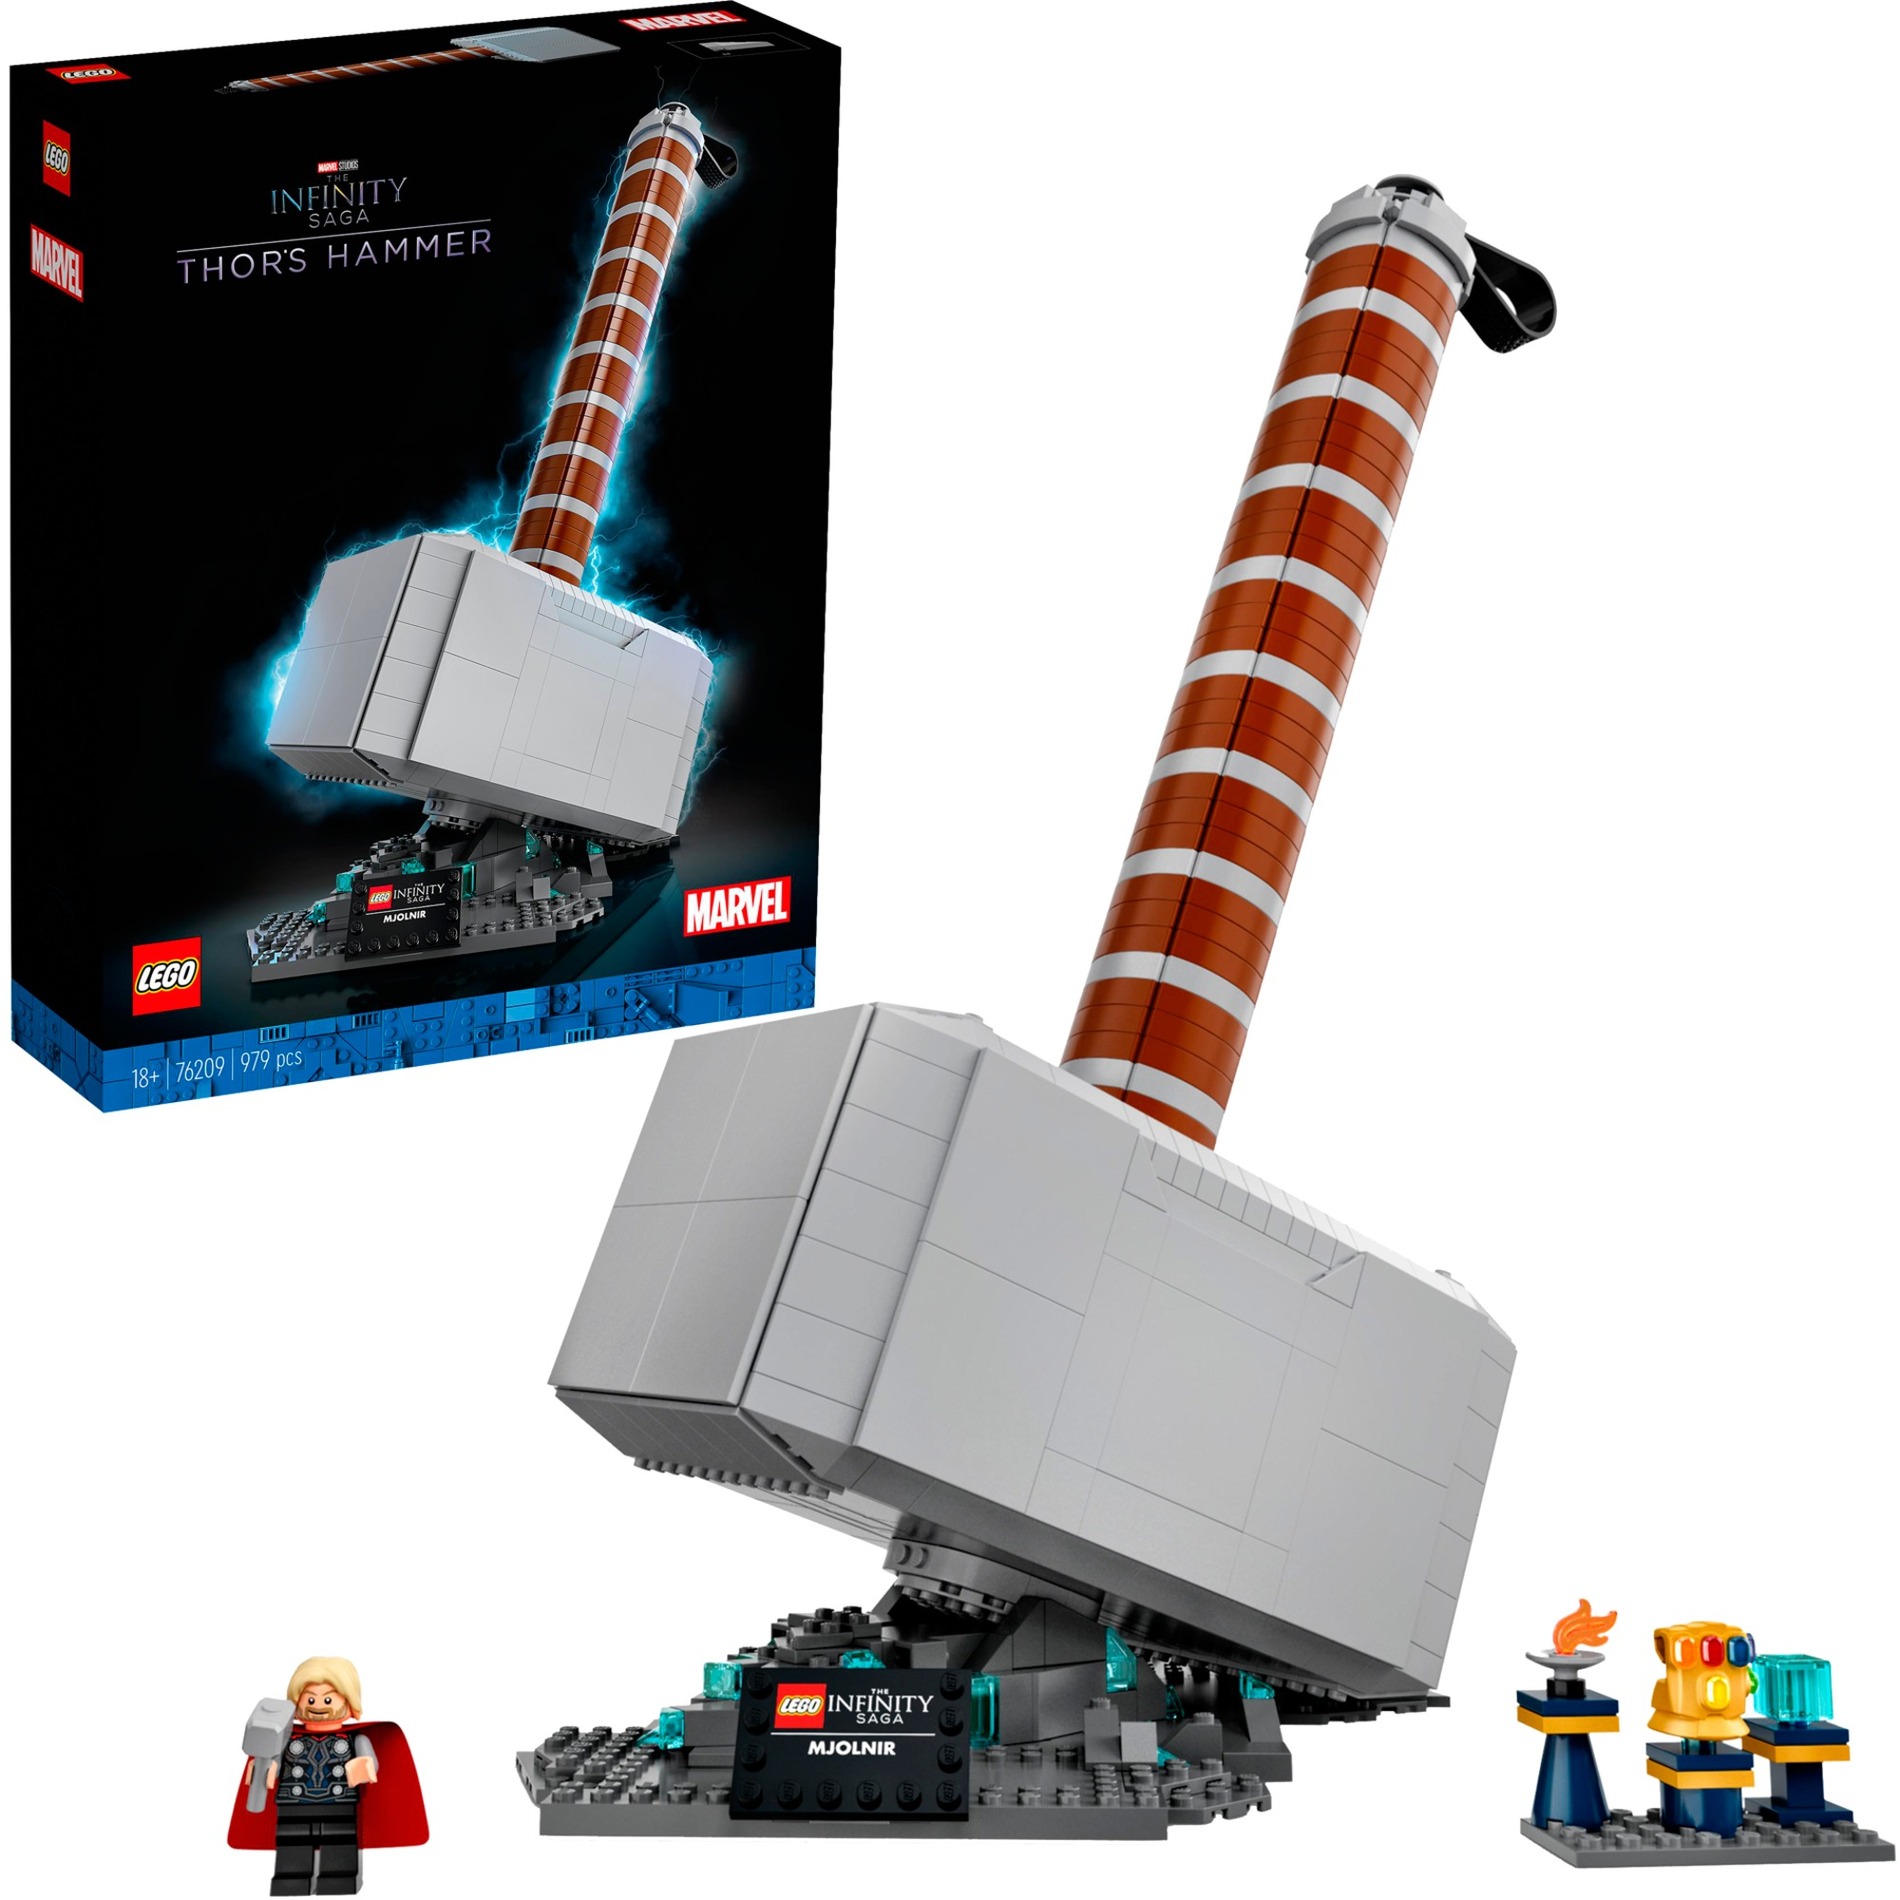 Spielzeug: Lego 76209 Marvel Super Heroes Thors Hammer